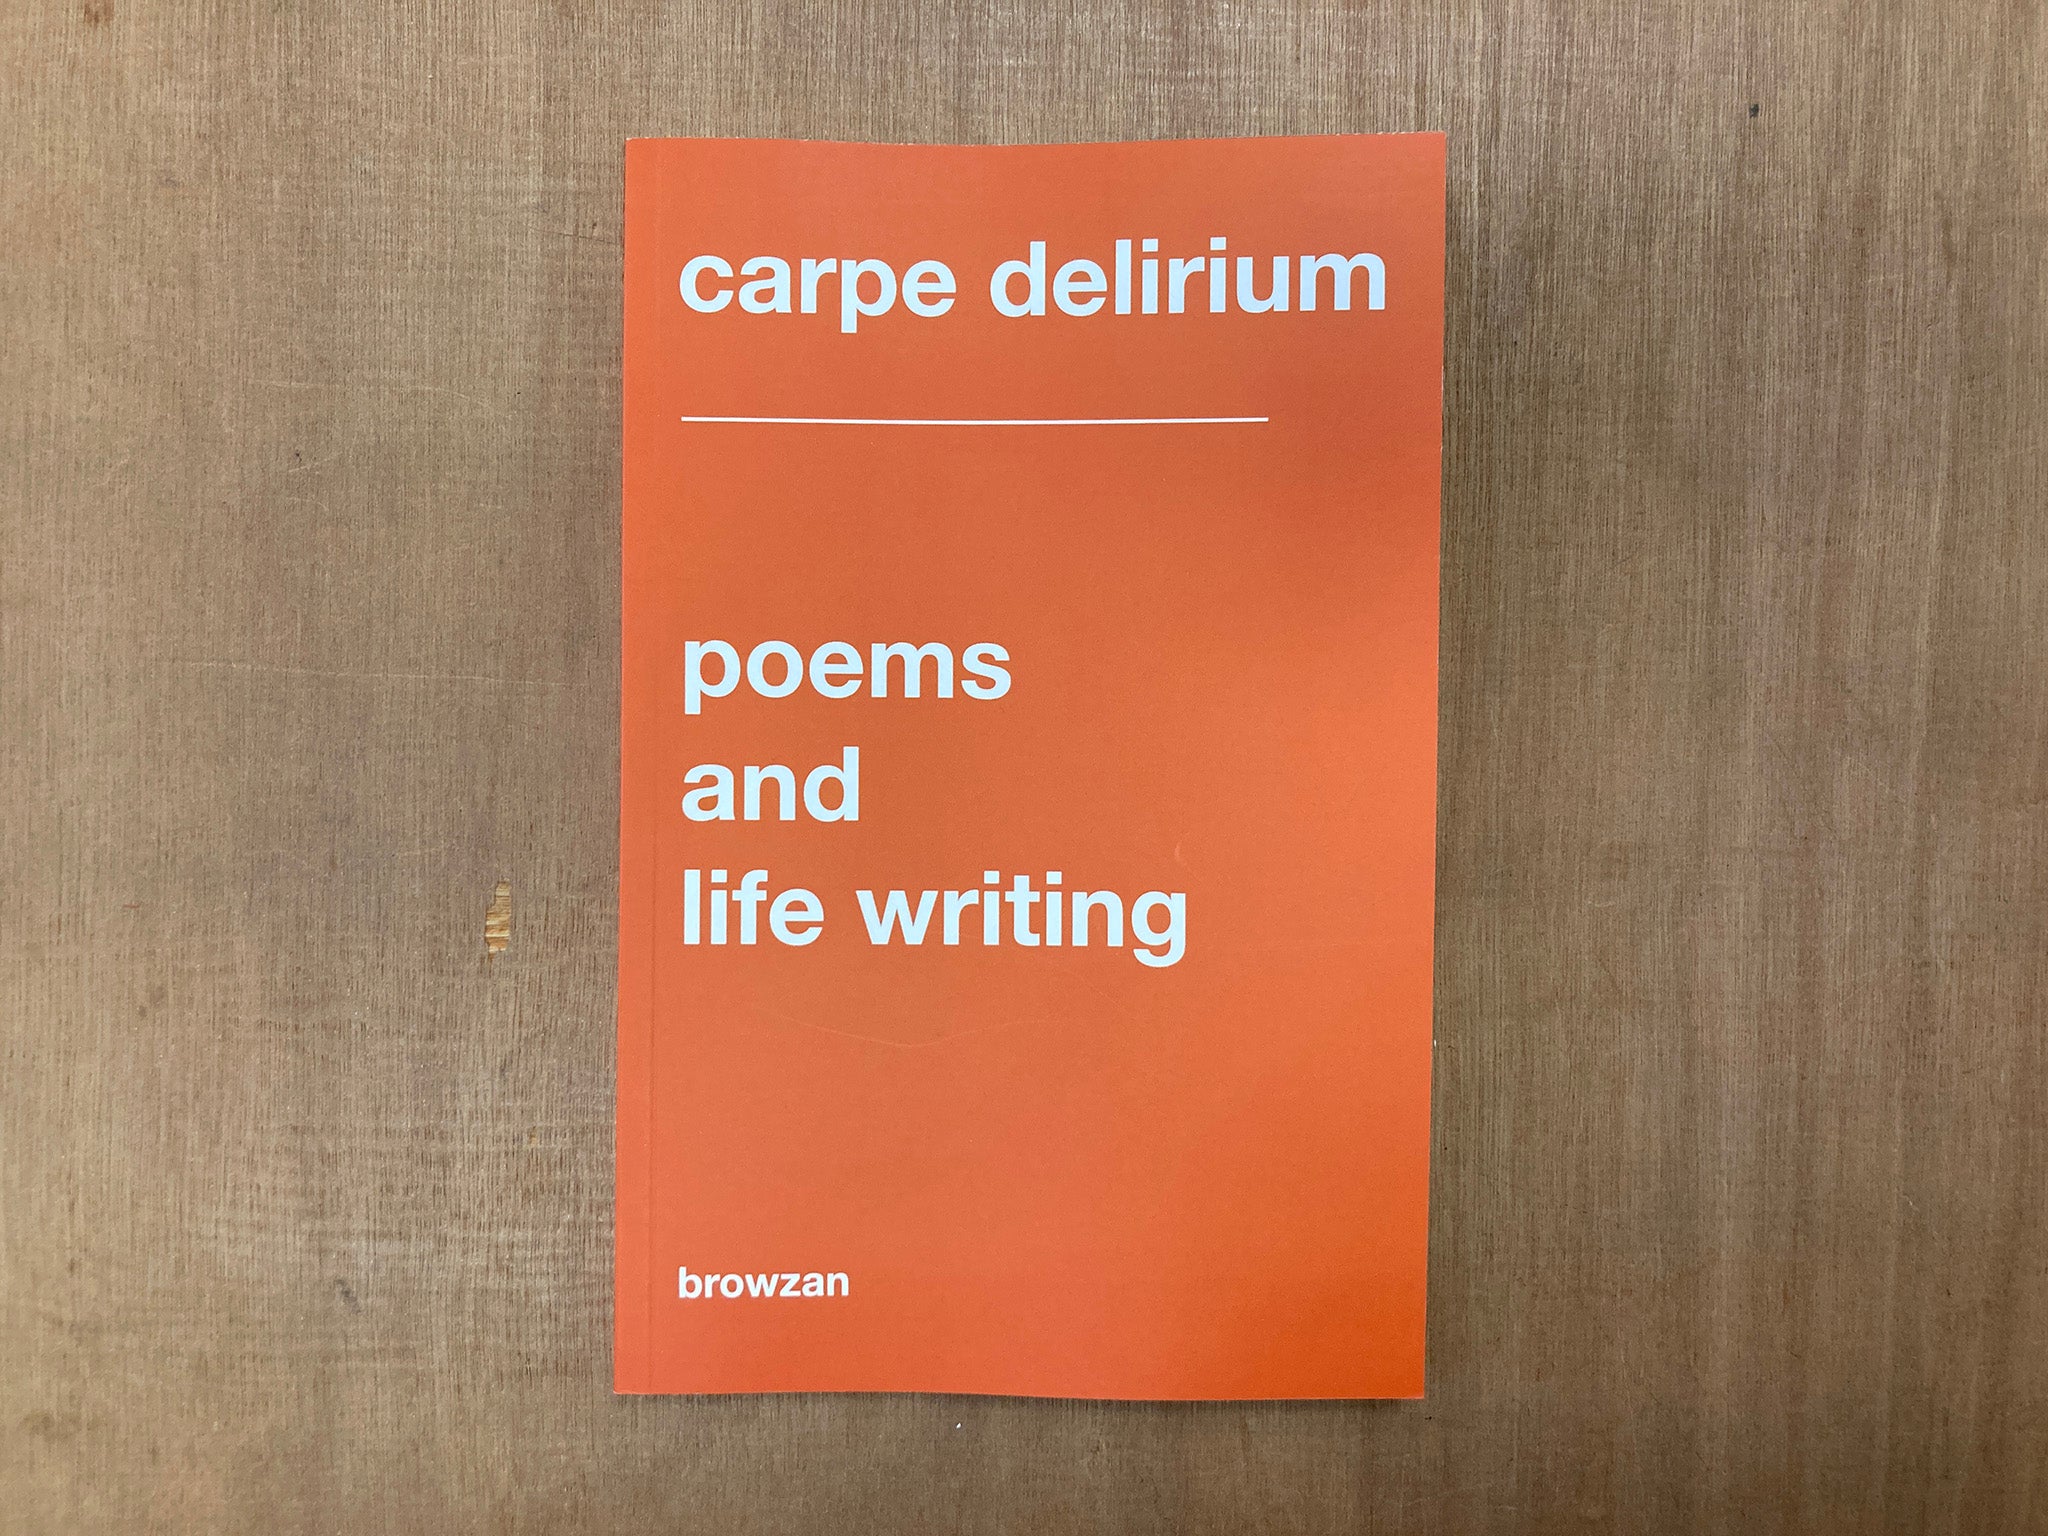 CARPE DELIRIUM by Browzan